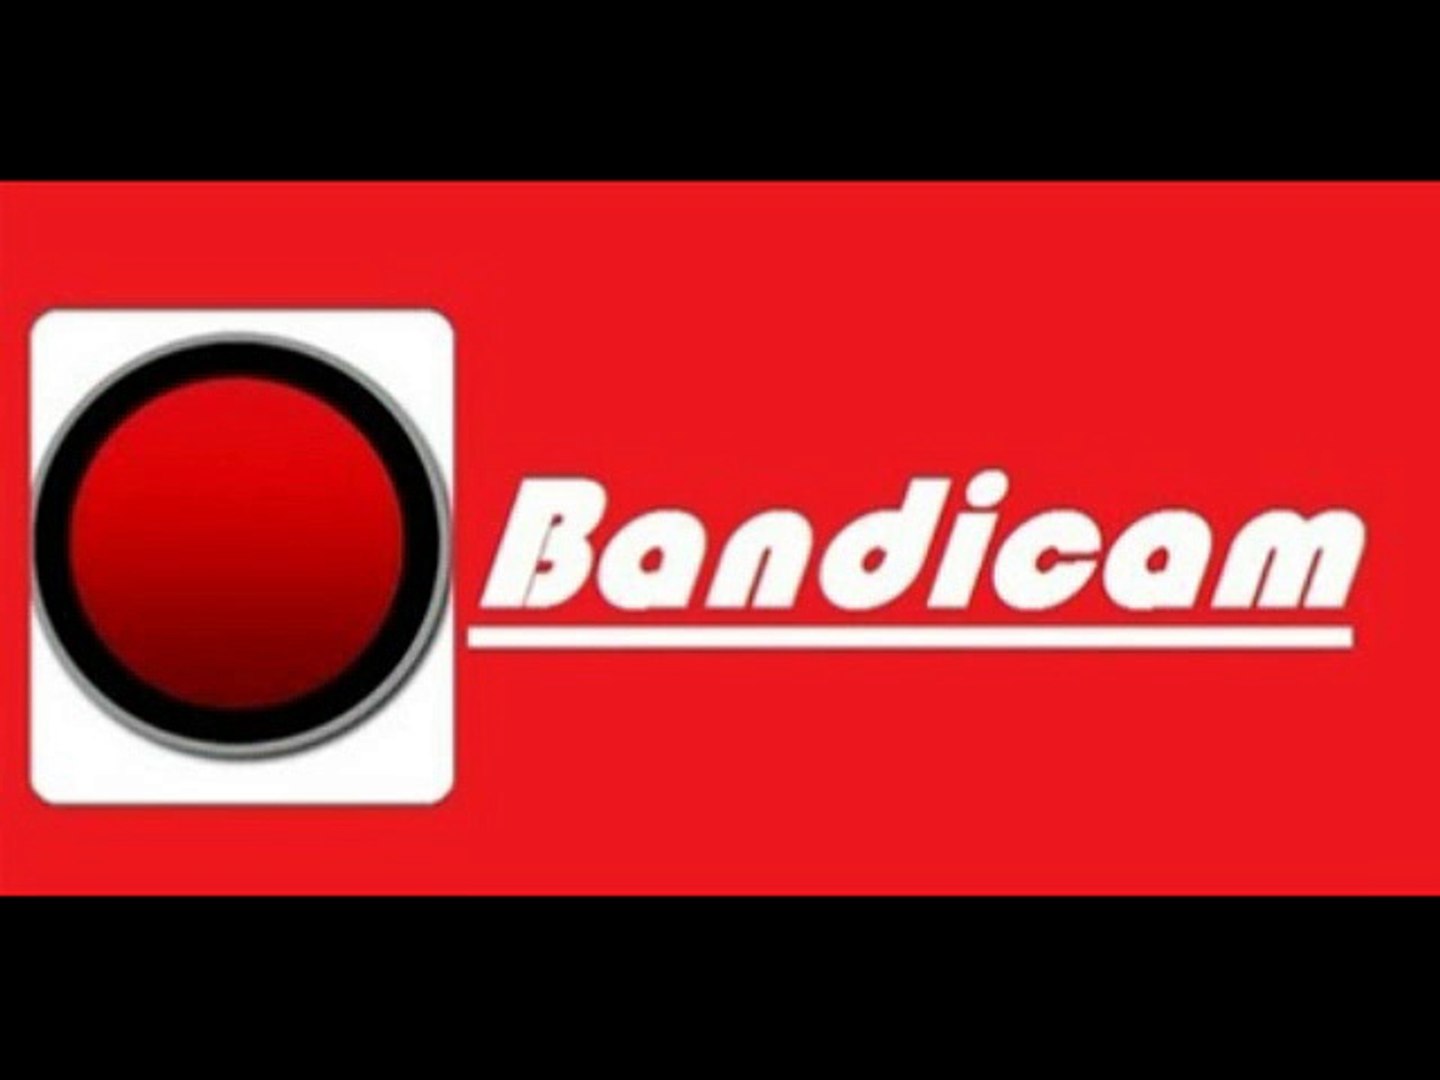 bandicam full version download kickass